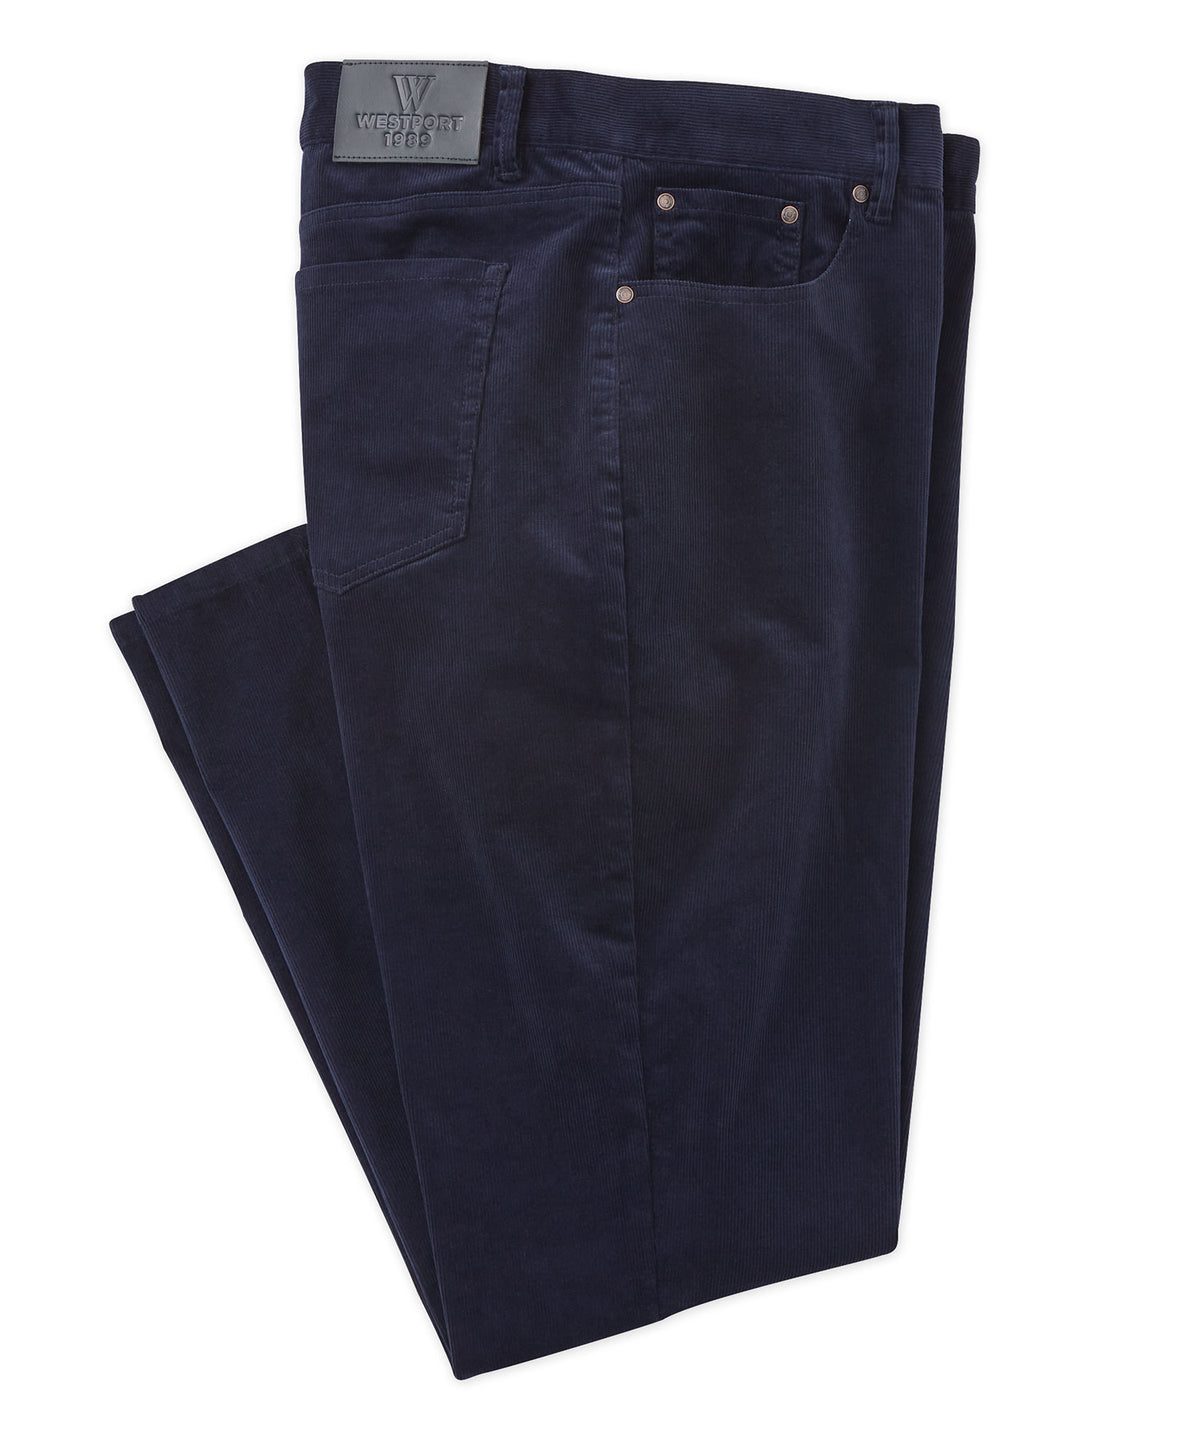 Westport 1989 5-Pocket Stretch Corduroy Pant, Big & Tall